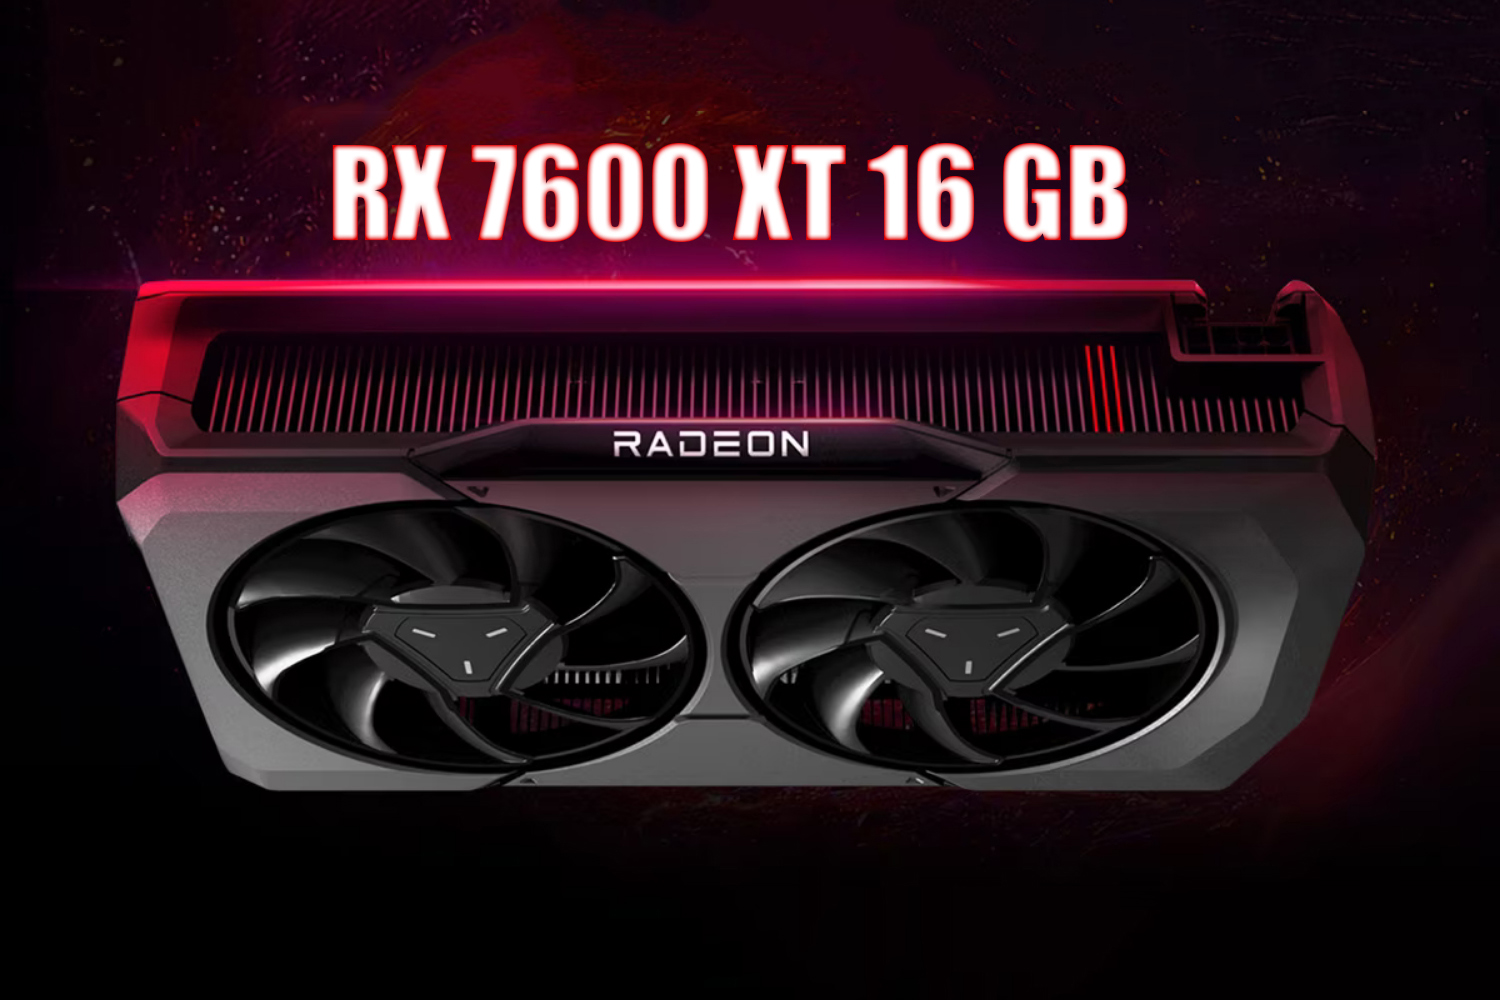 AMD Radeon RX 7600 XT midrange gaming GPU with 16 GB VRAM could launch